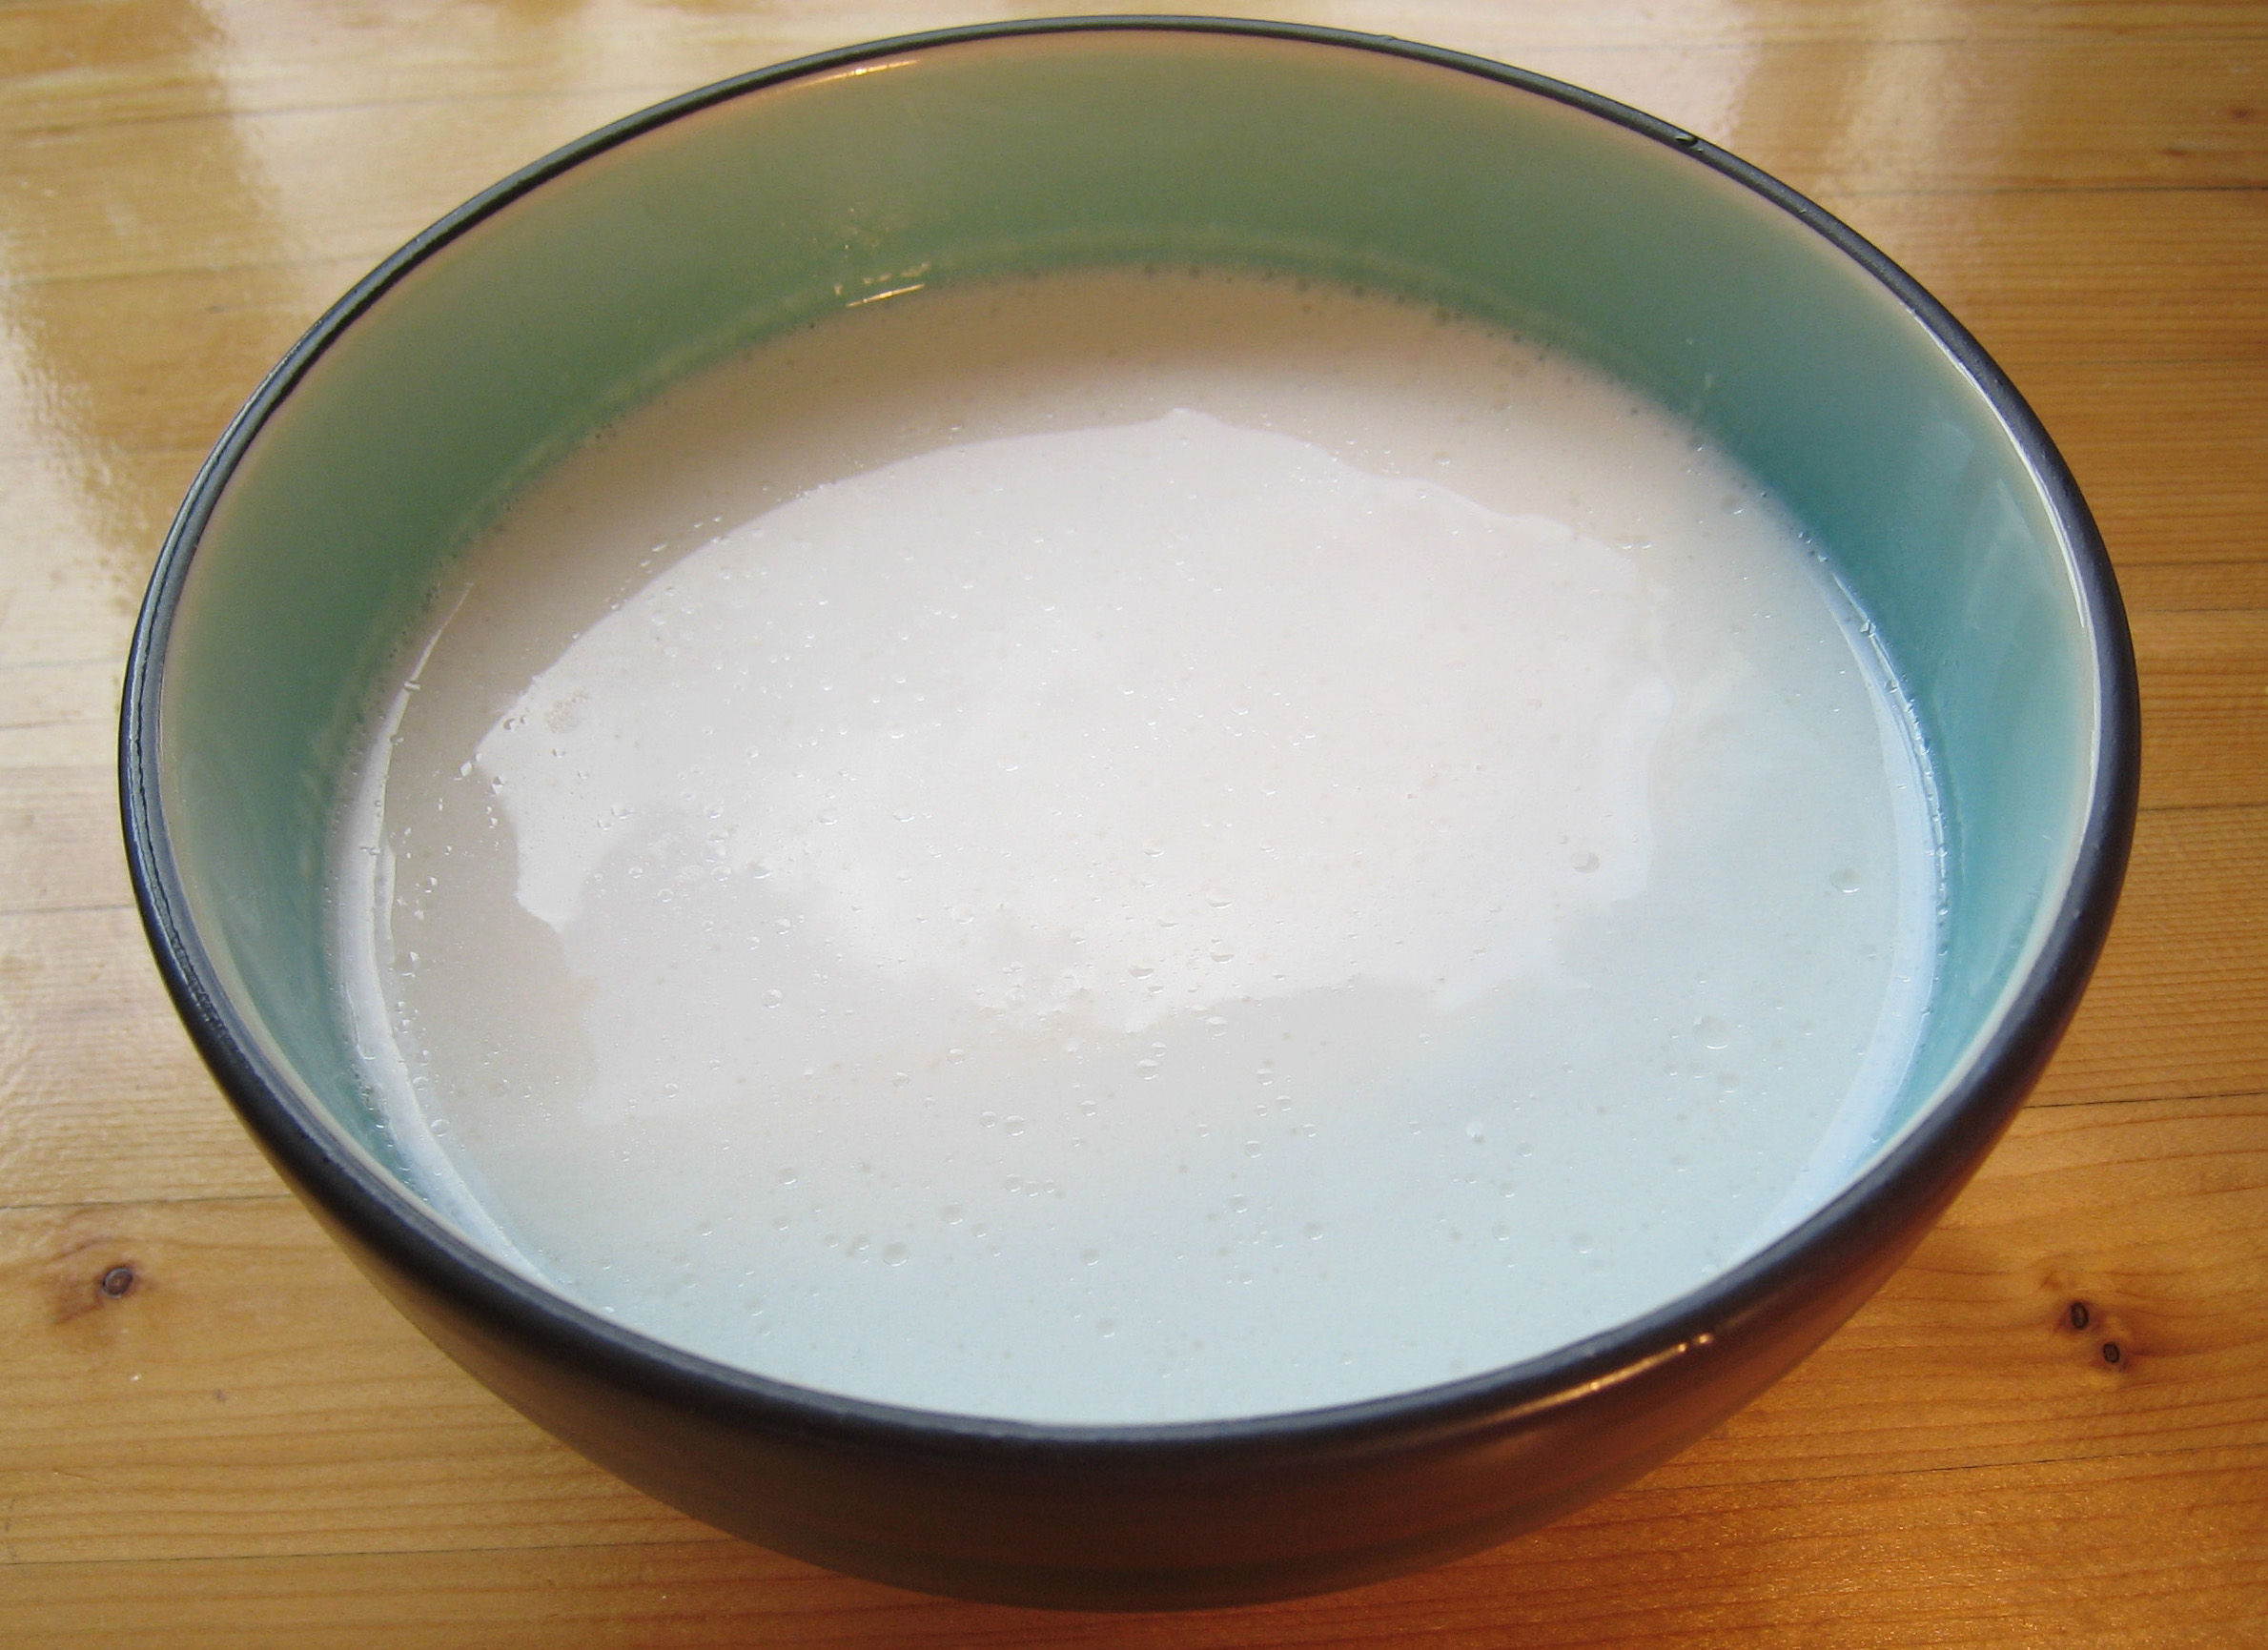 Vegan homemade coconut sour cream